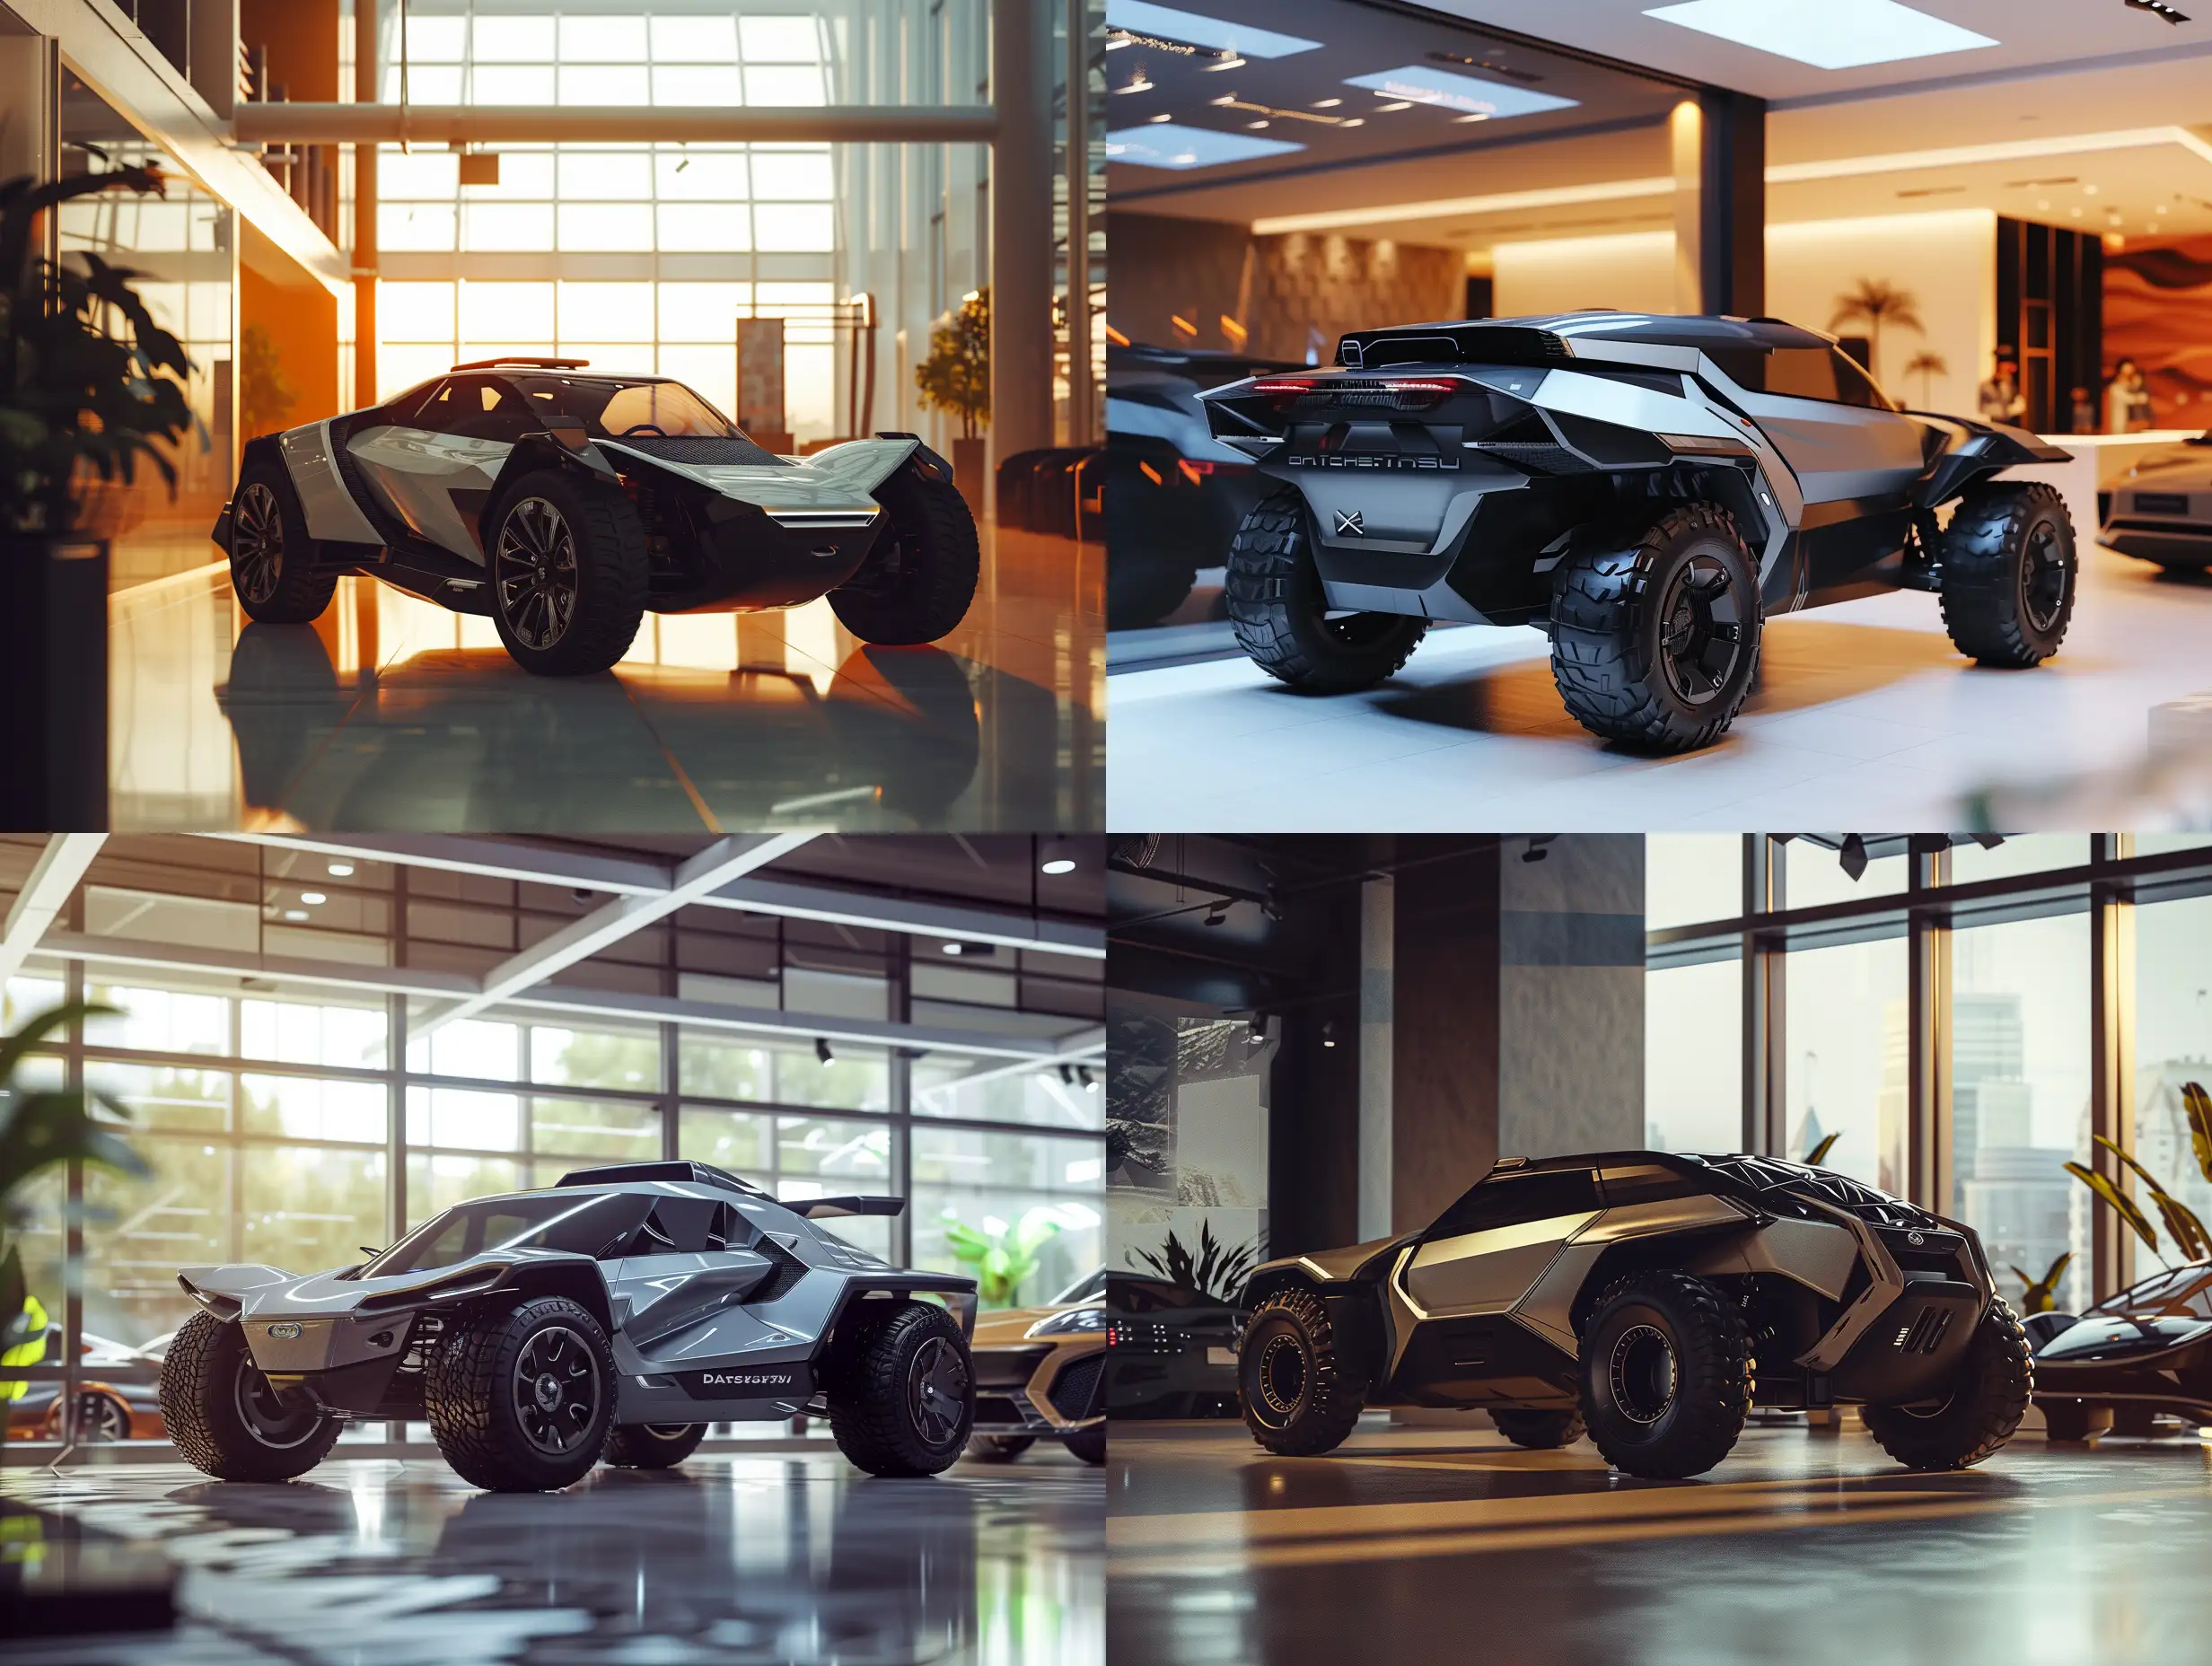 Futuristic-Daihatsu-Xenia-All-Terrain-Vehicle-Displayed-in-Porsche-Design-Car-Showroom